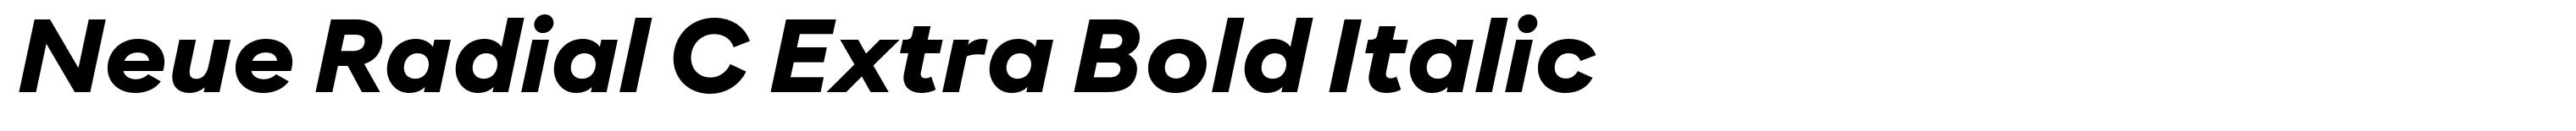 Neue Radial C Extra Bold Italic